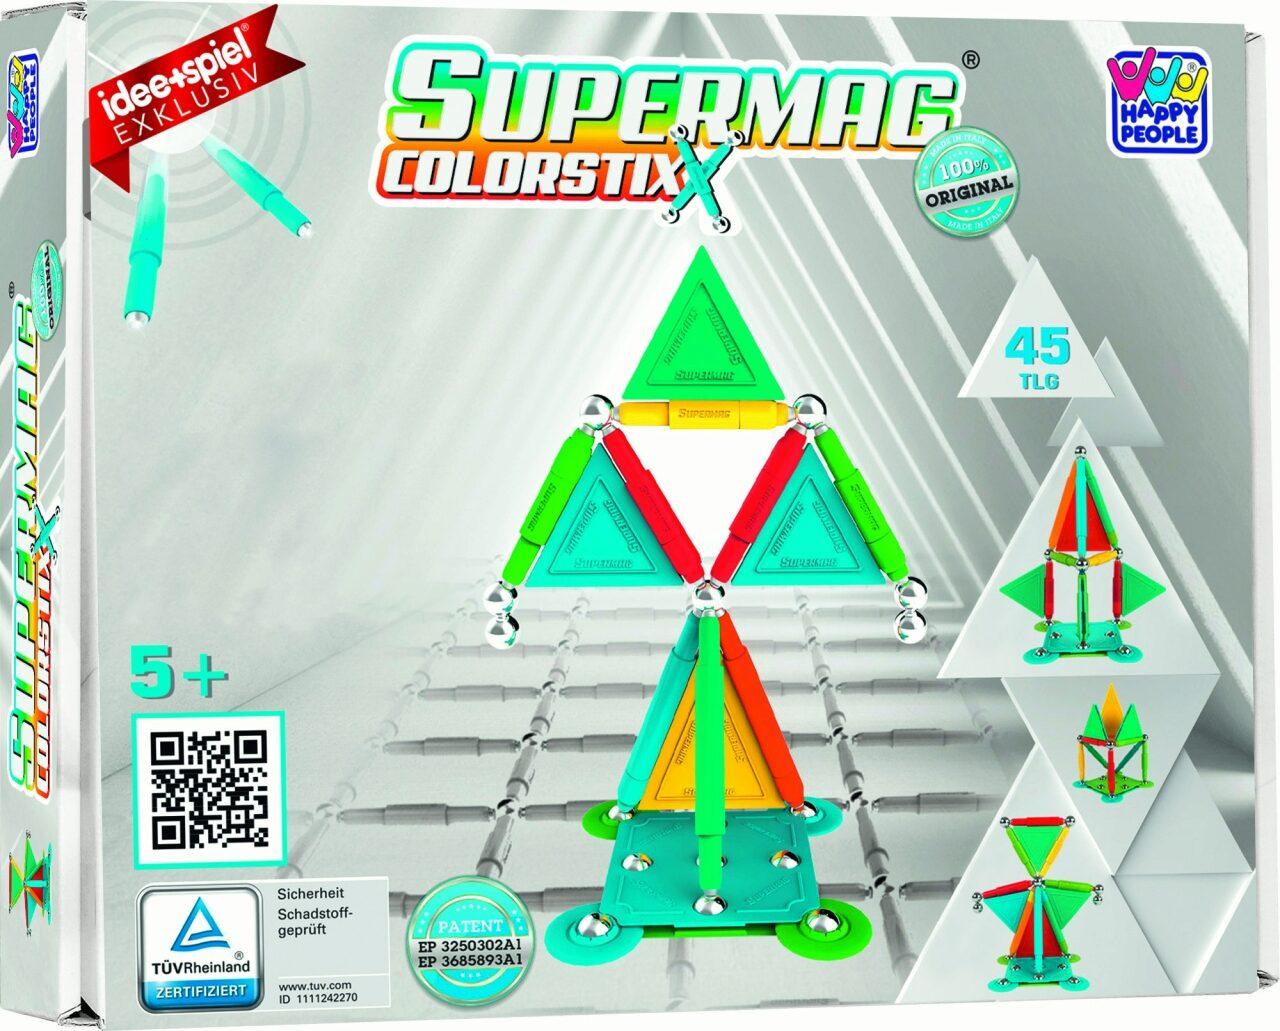 Supermag Colorstix - 45 teilig